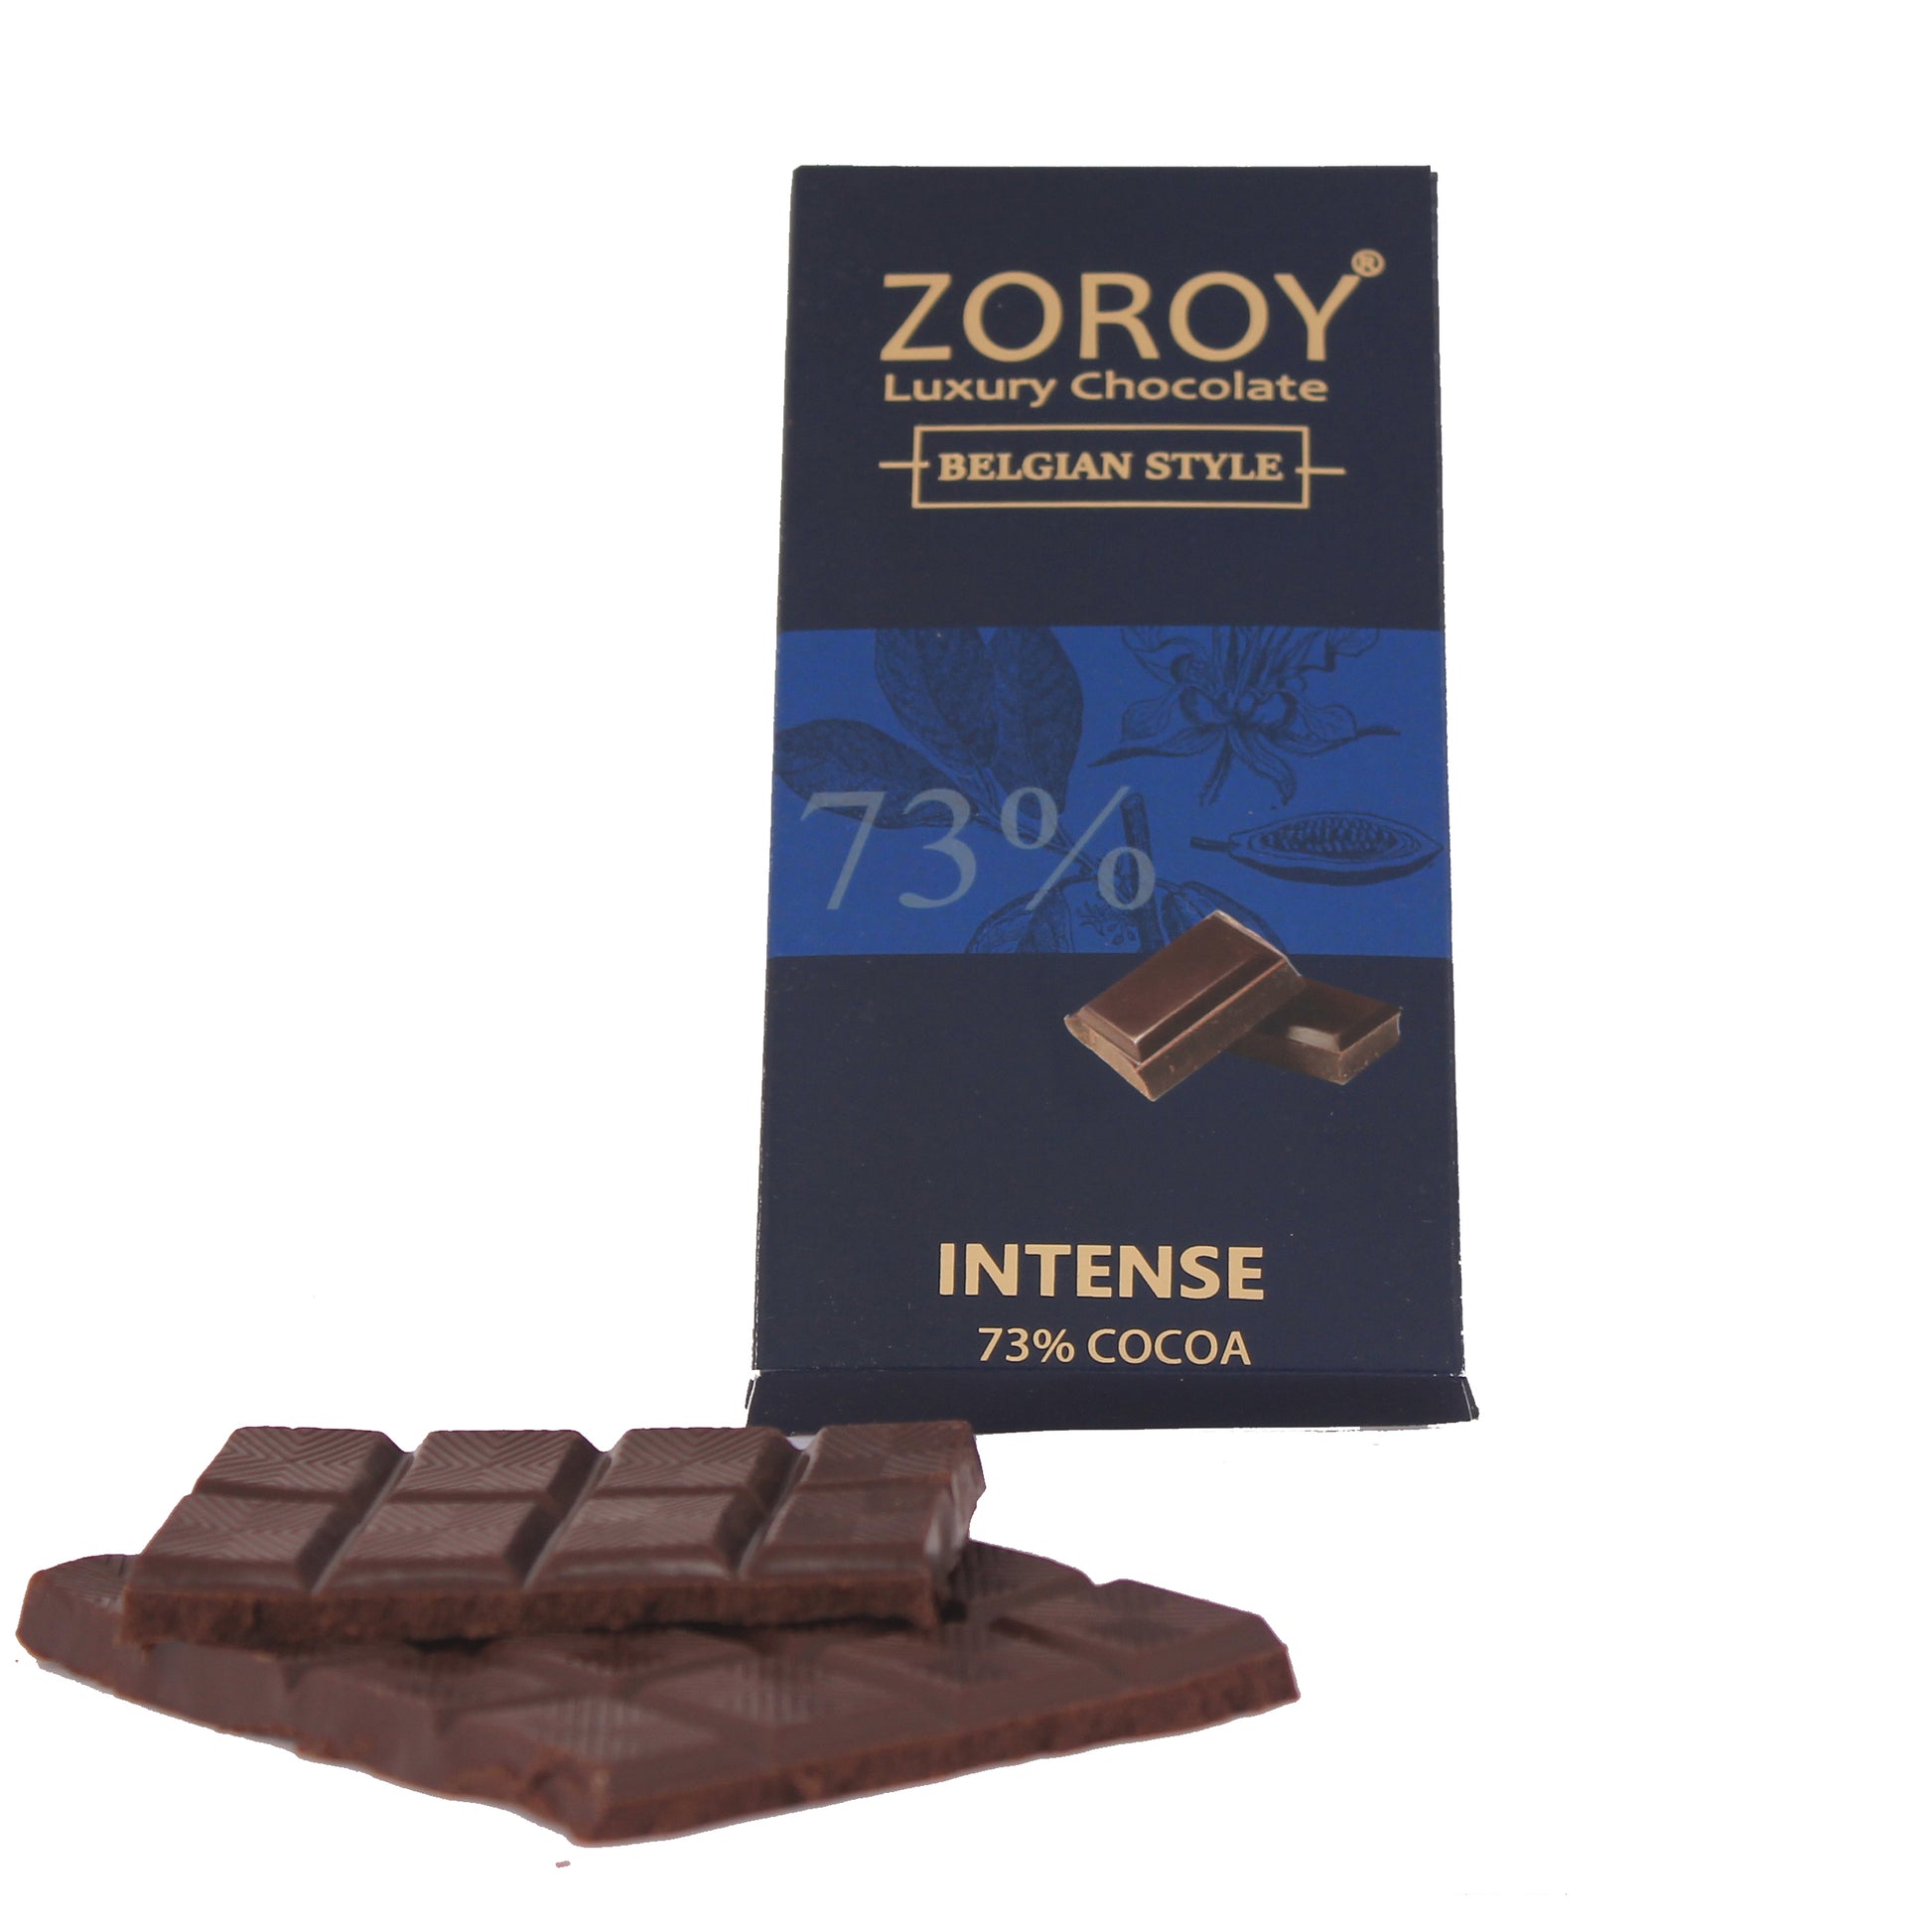 ZOROY LUXURY CHOCOLATE Pure Couverture 73% Intense Dark chocolate bar